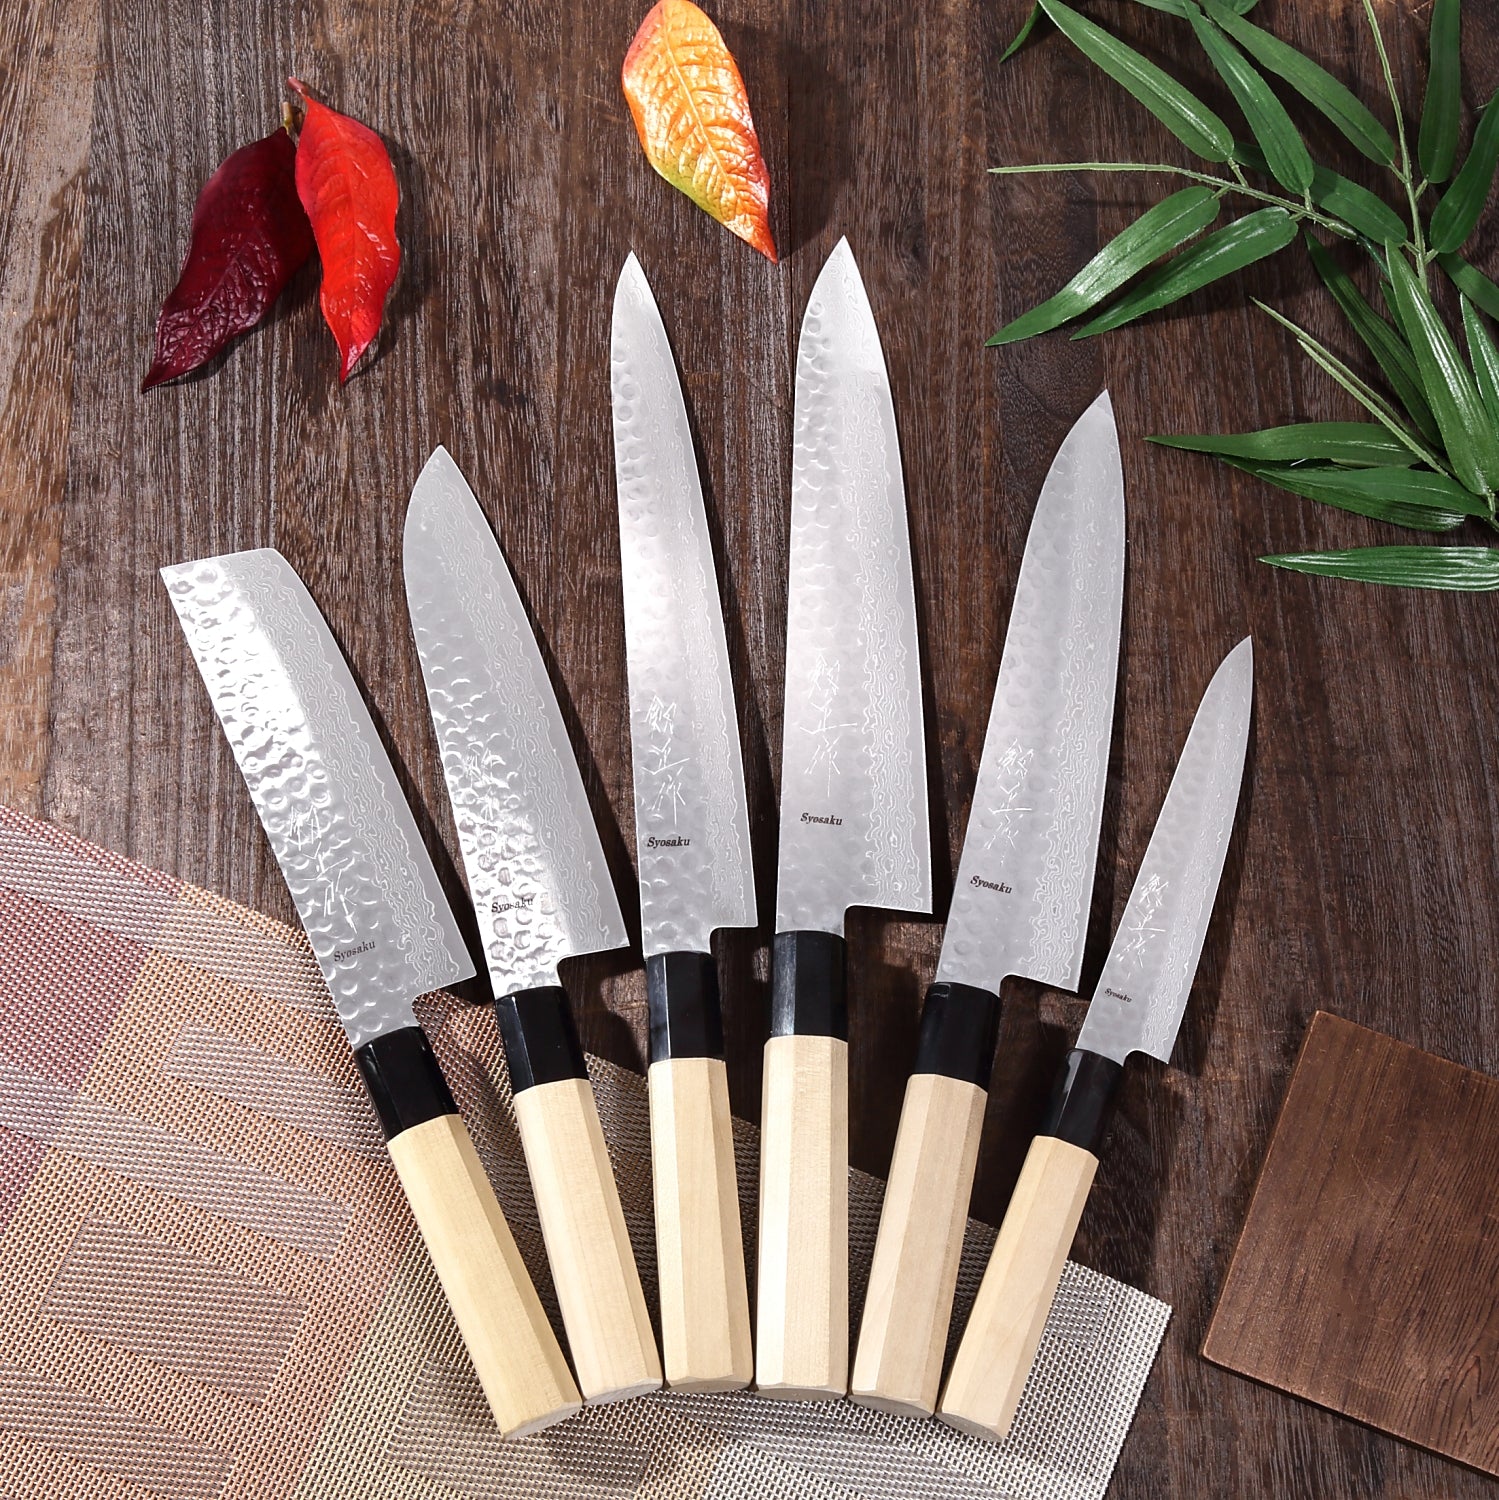 Dalstrong Nakiri Knife - 6 inch - Shogun Series - Damascus Vegetable Knife - Japanese AUS-10V Super Steel Kitchen Knife - Vacuum Treated - Crimson